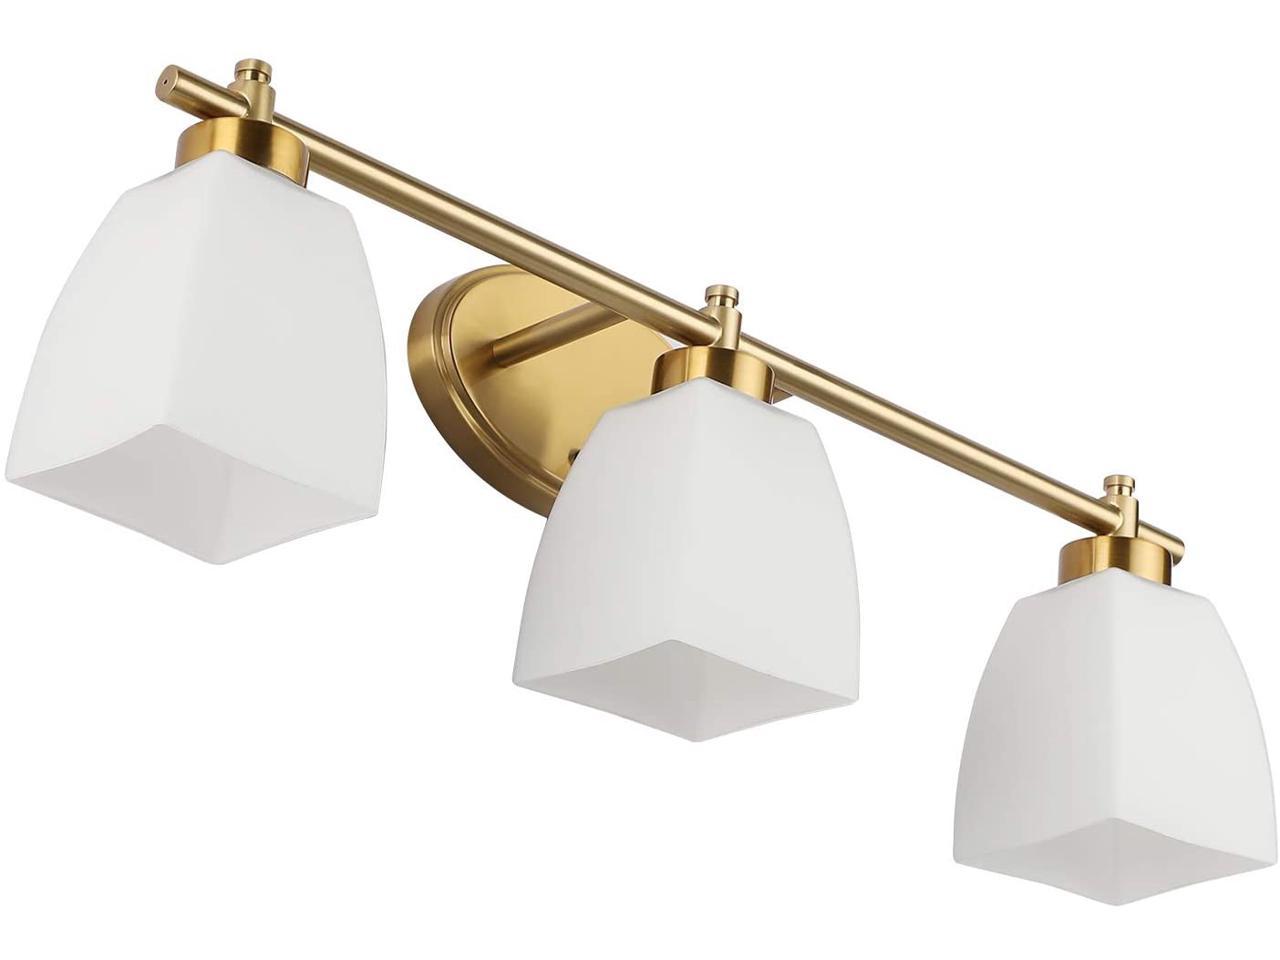 Ecobrt 3 Light Bathroom Vanity Light Fixture Brass